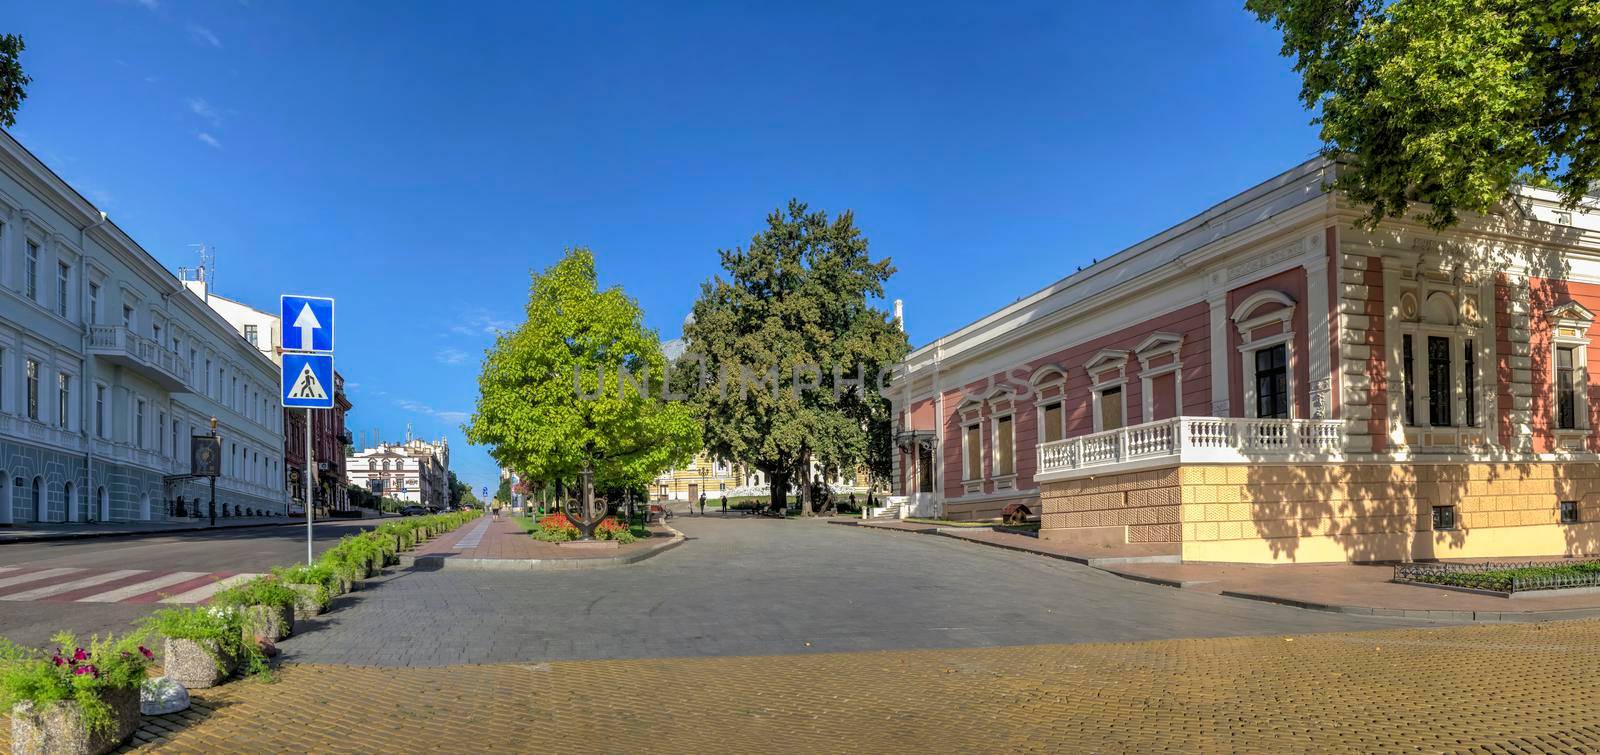 Lanzheronovskaya street in Odessa, Ukraine by Multipedia